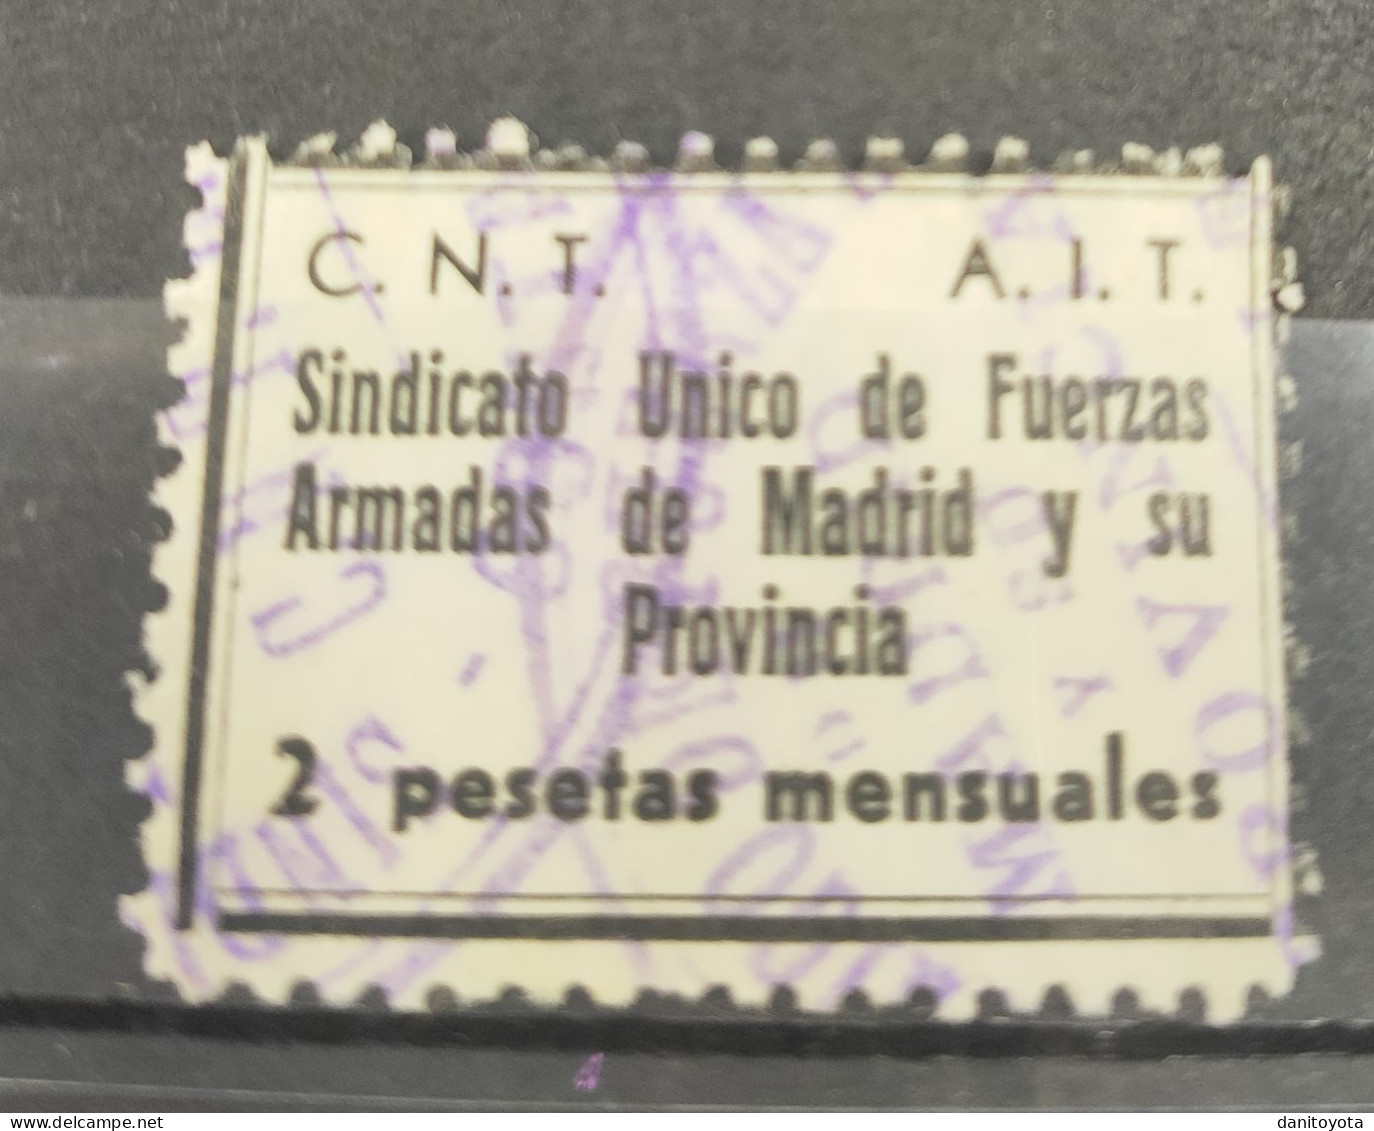 MADRID. EDIFIL N/C. 2 PTAS NEGRO CNT- AIT. - Republikanische Ausgaben